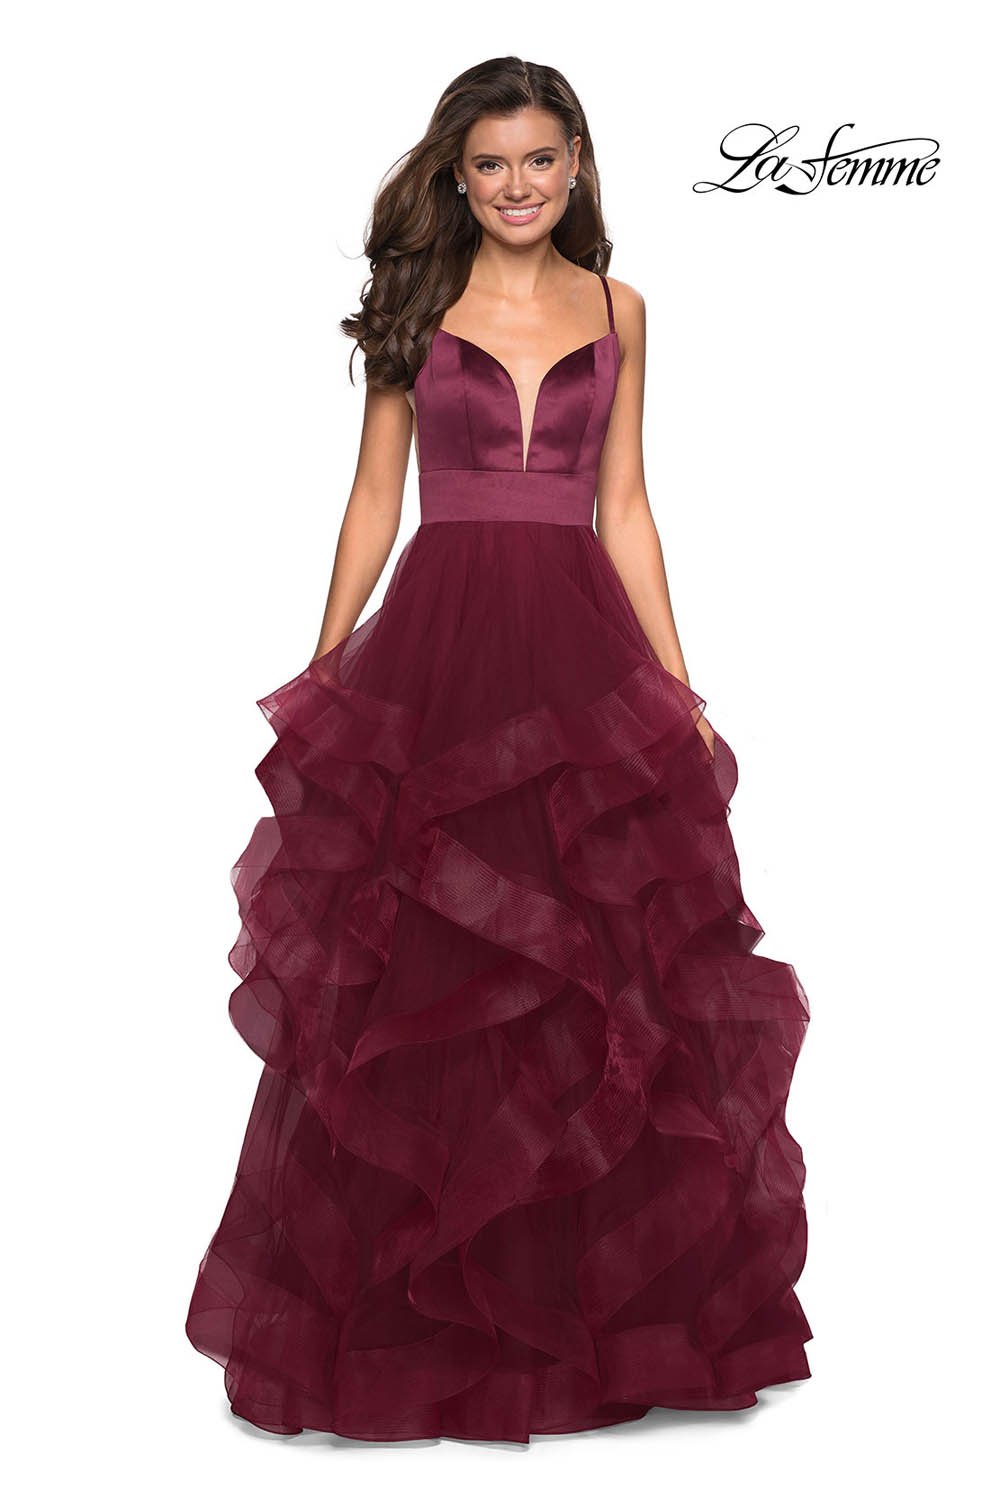 La Femme 27024 dress images in these colors: Black, Burgundy, Lavender, Light Pink, White.